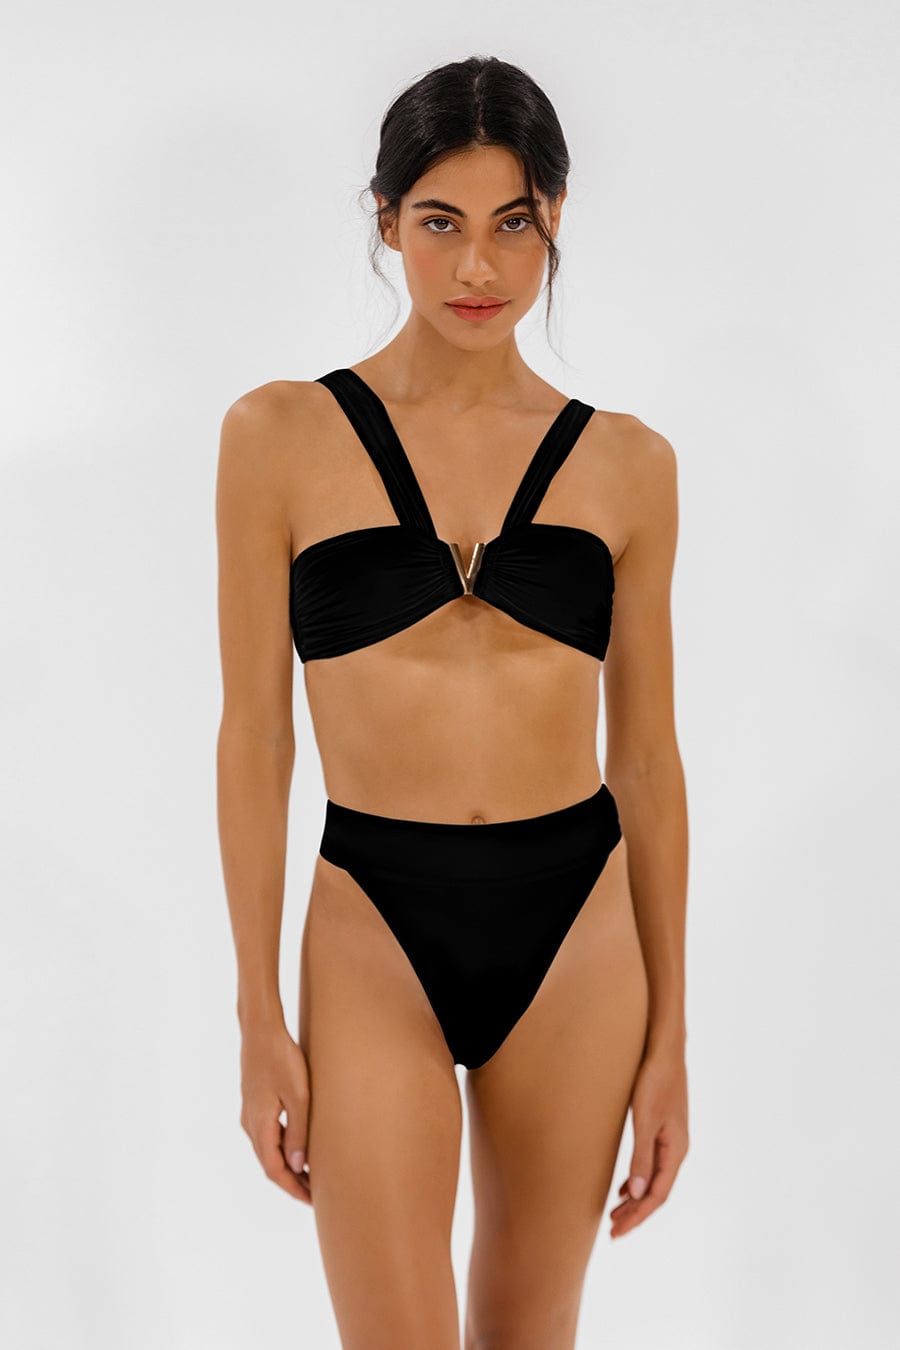 Jacques Ruched Bandeau Bikini Top in Black by ALT Swim